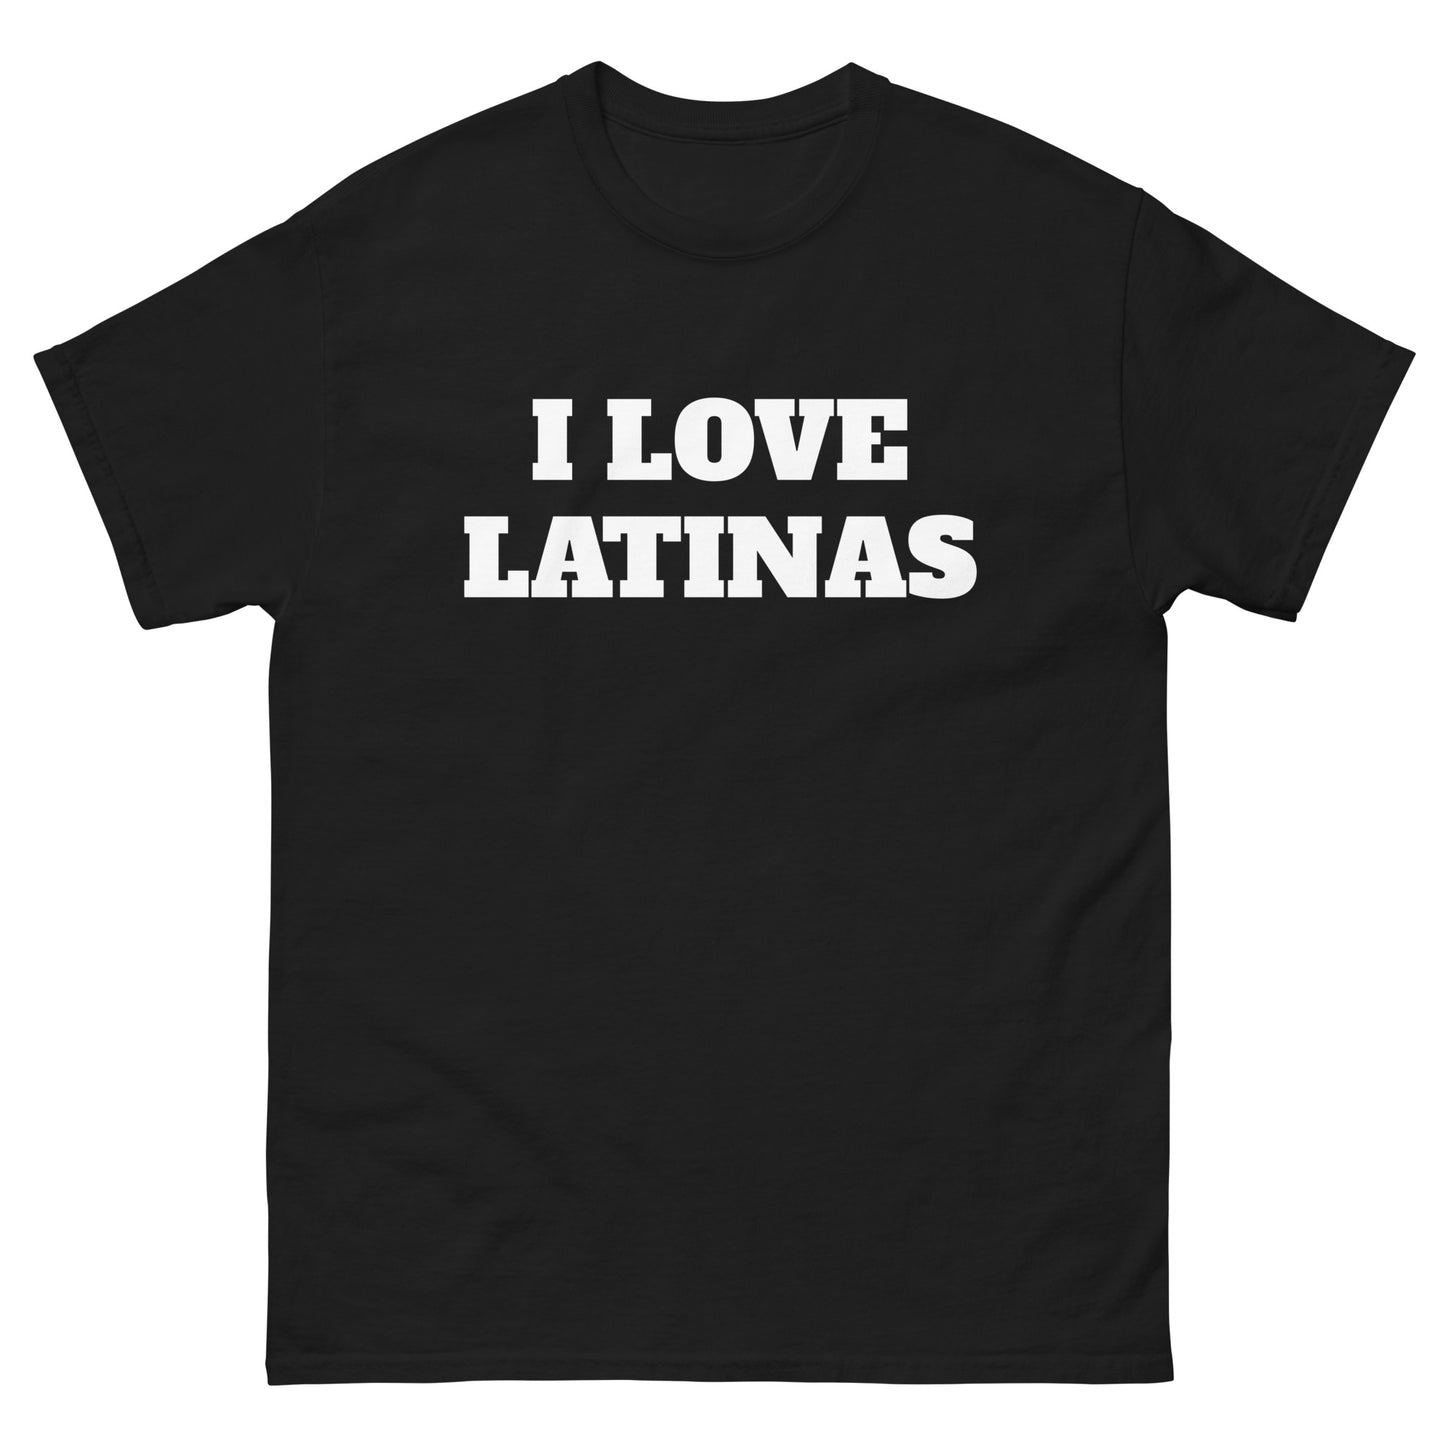 I Love Latinas Tee